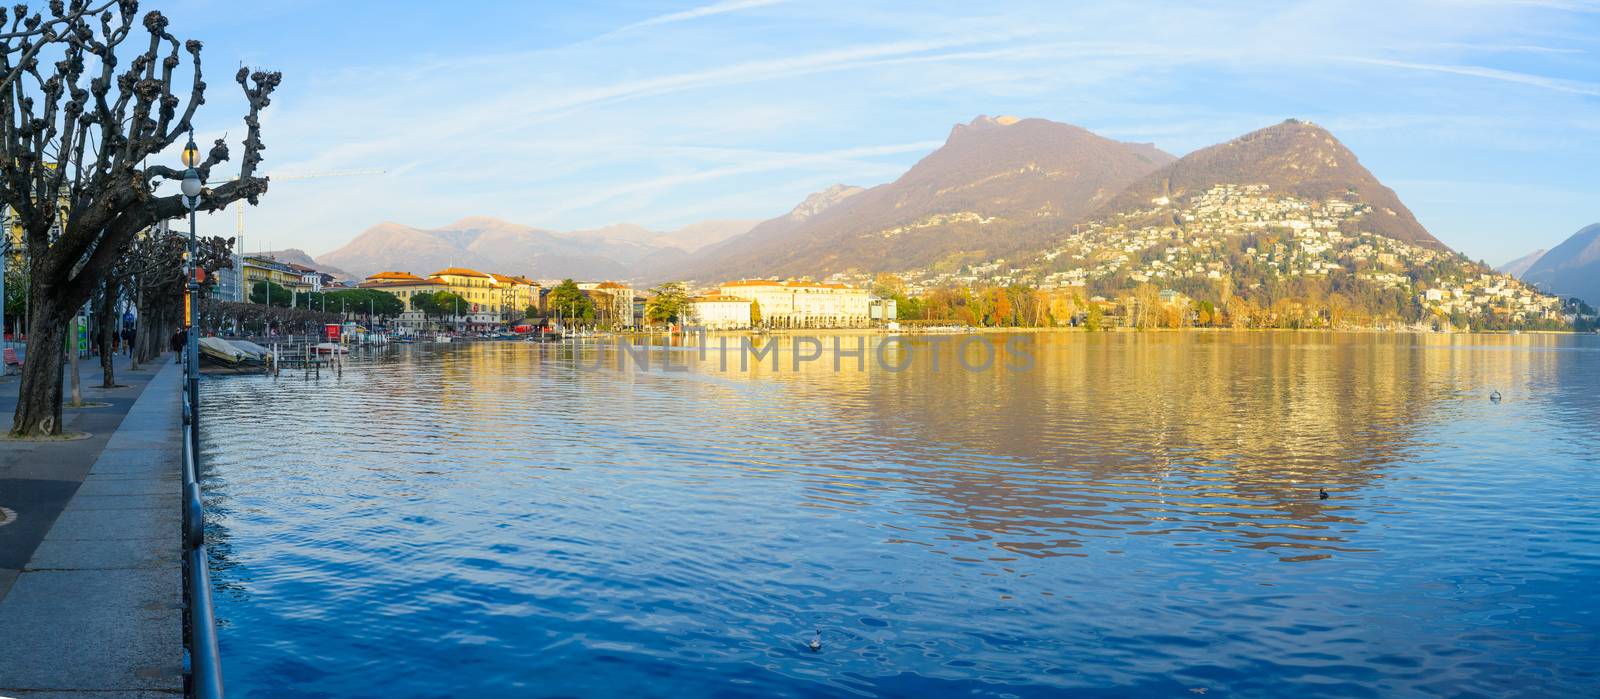 The lakeside promenade, Lugano by RnDmS